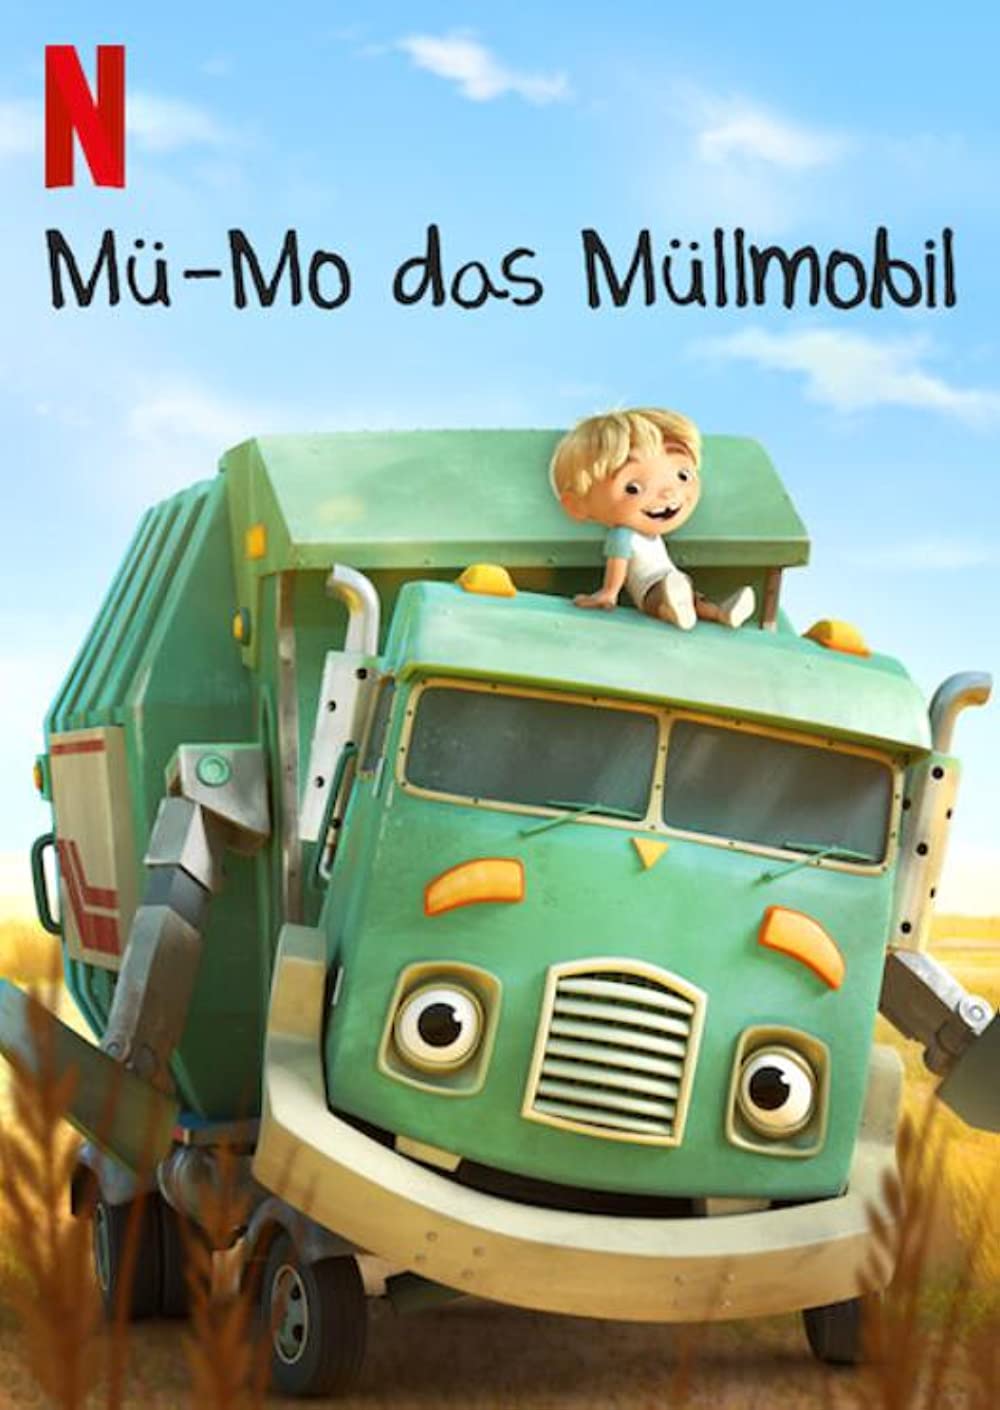 Filmbeschreibung zu Mü-Mo das Müllmobil